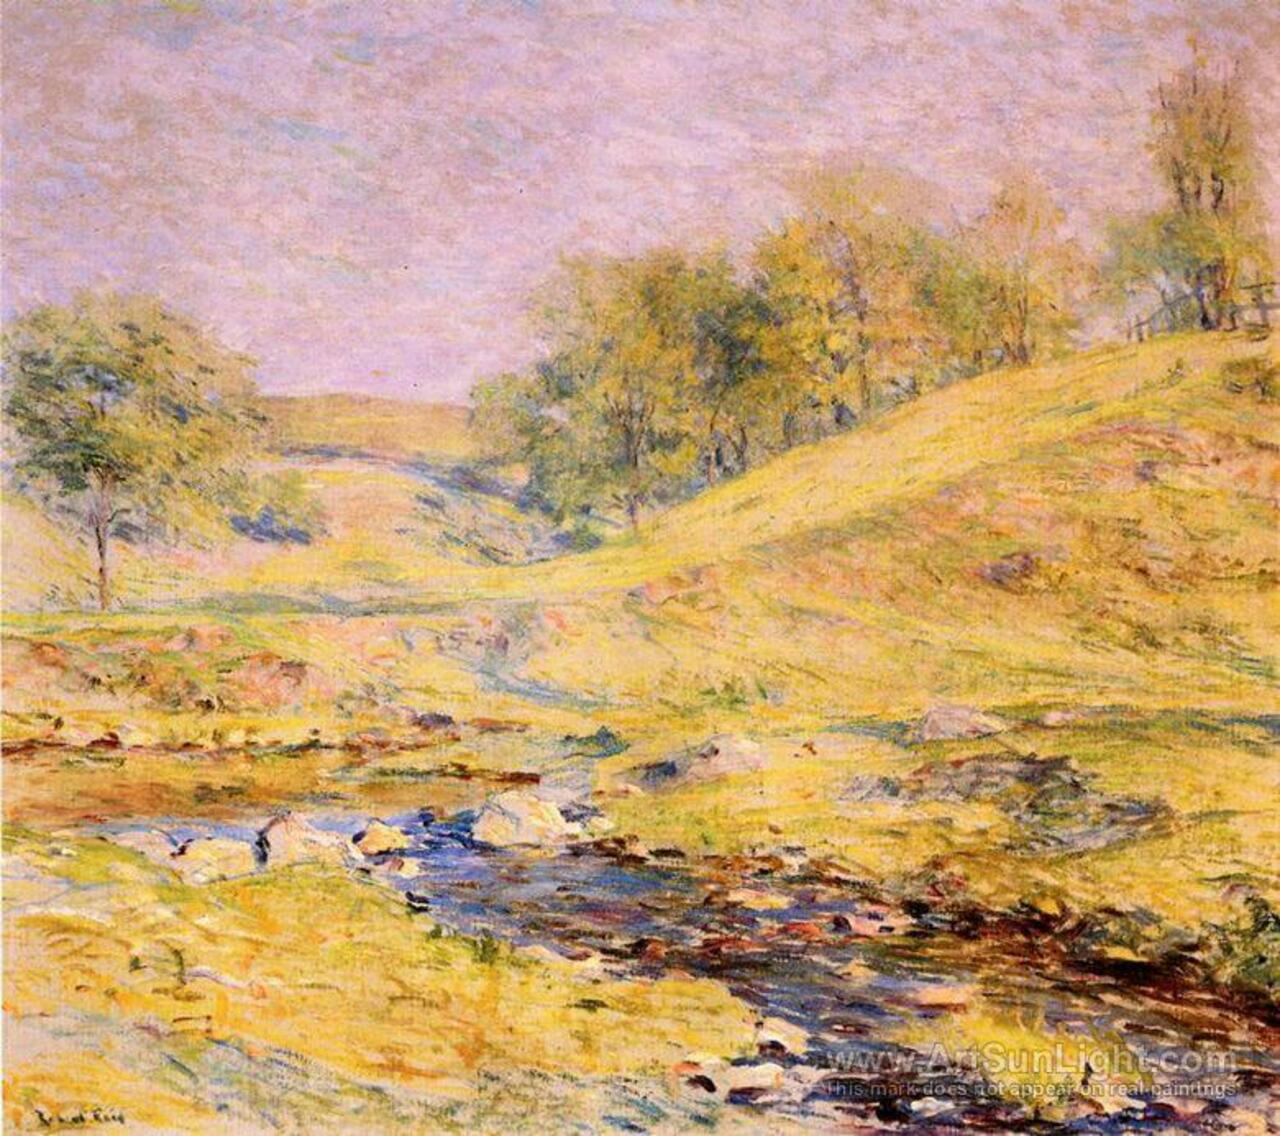 Landscape with Stream
ROBERT REID ( Robert Lewis Reid) 1862-1929. 
American Impressionist, painter and muralist. http://t.co/IE0GUz3bud